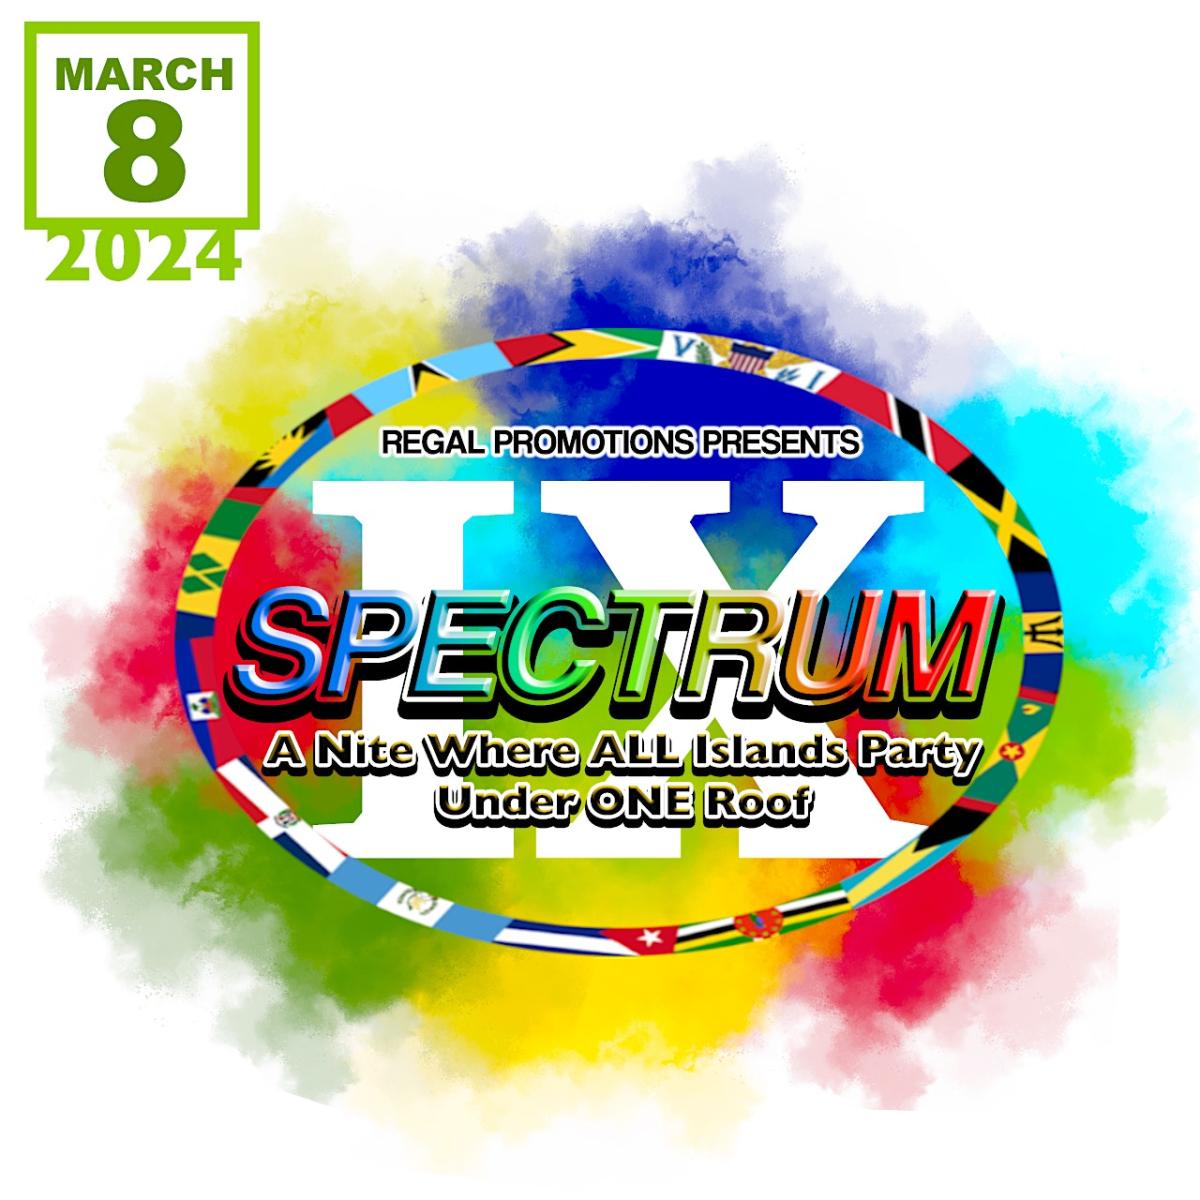 Spectrum 9 flyer or graphic.